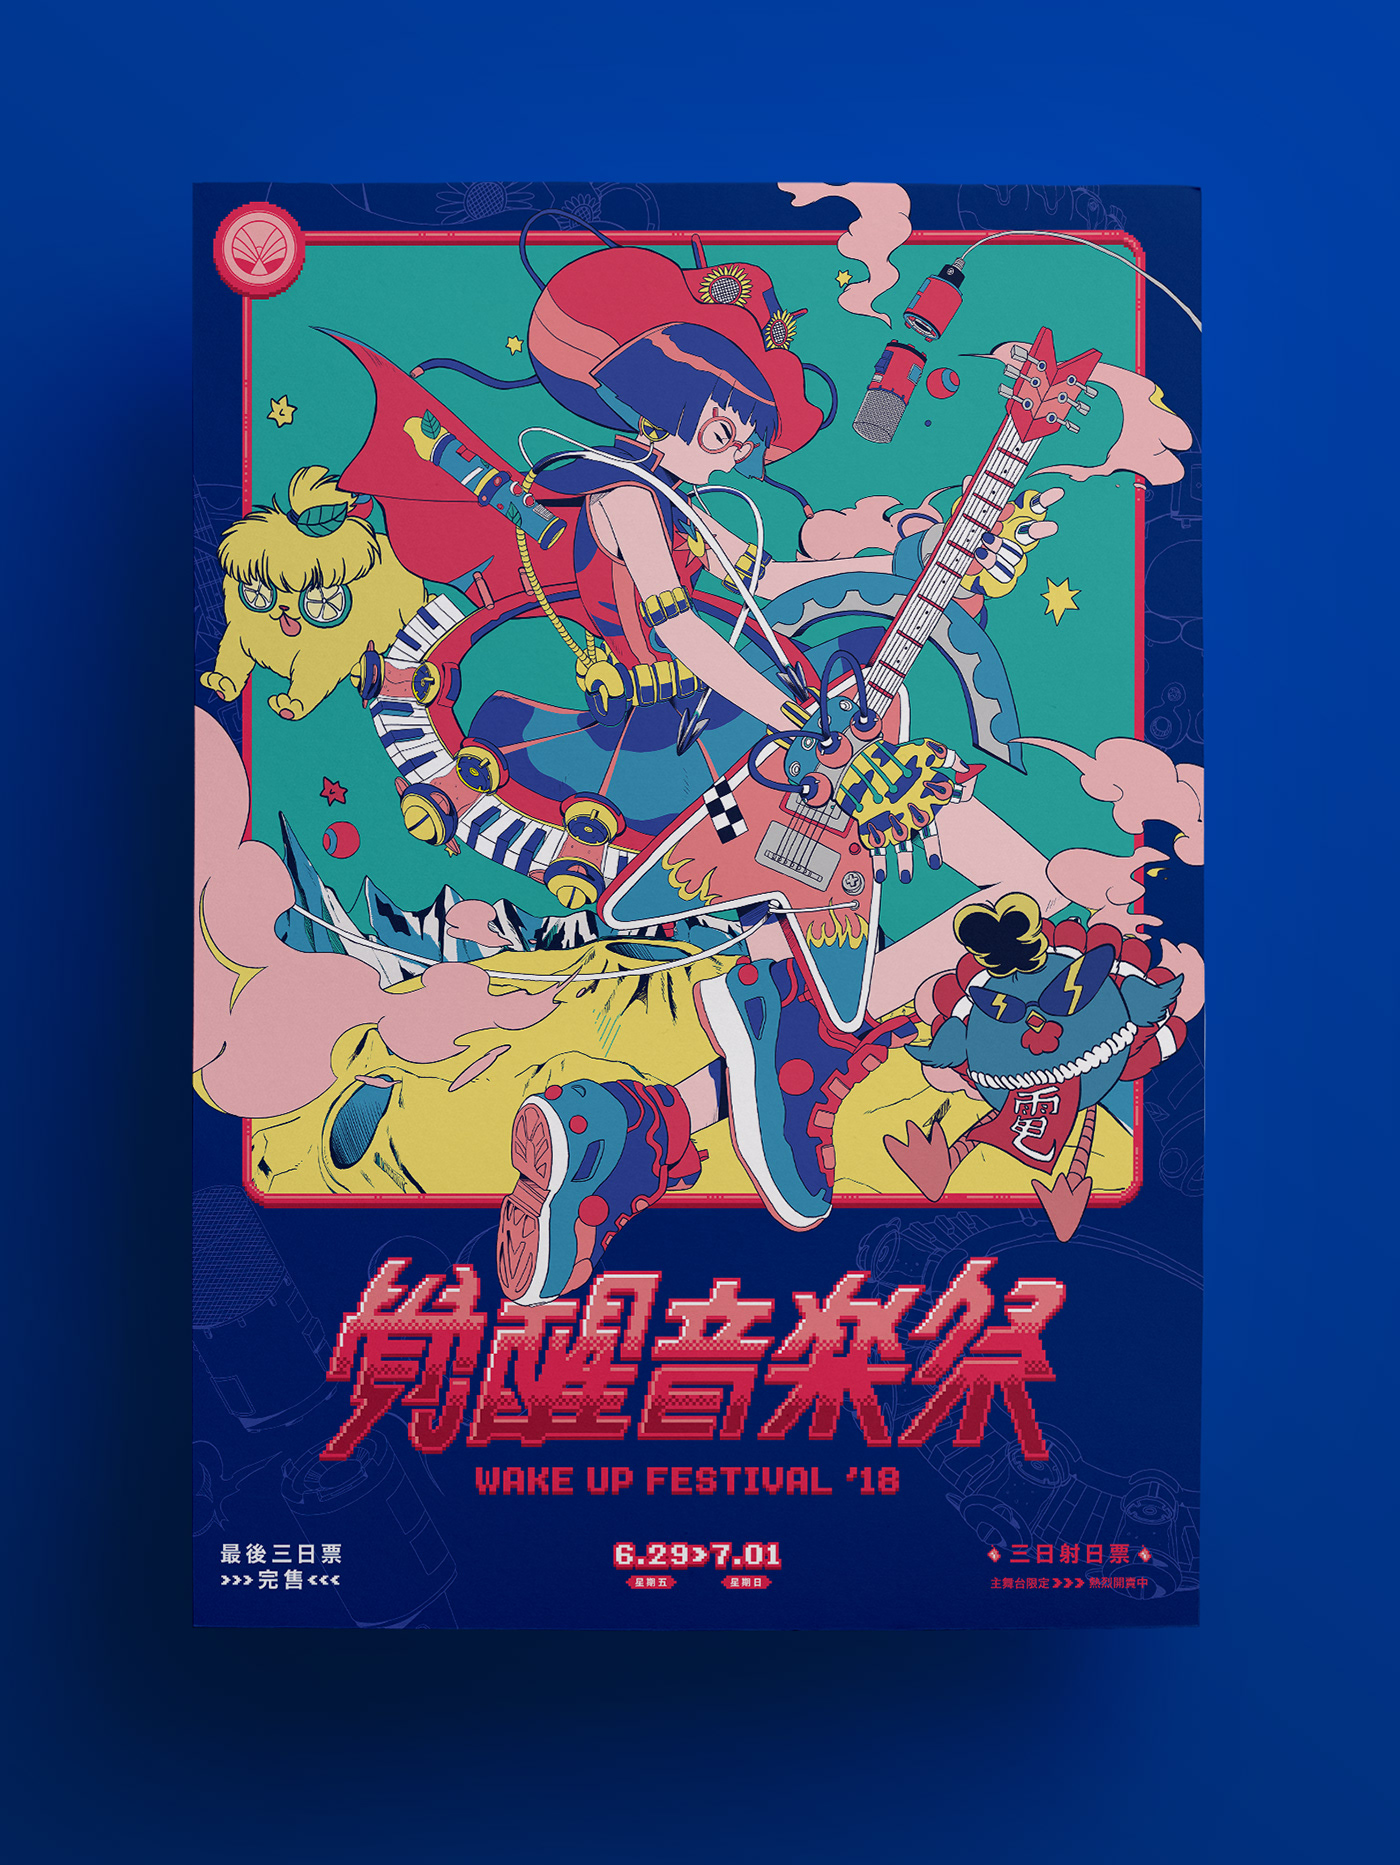 覺醒音樂祭 音樂祭 festival Wakeup 8-bit game music